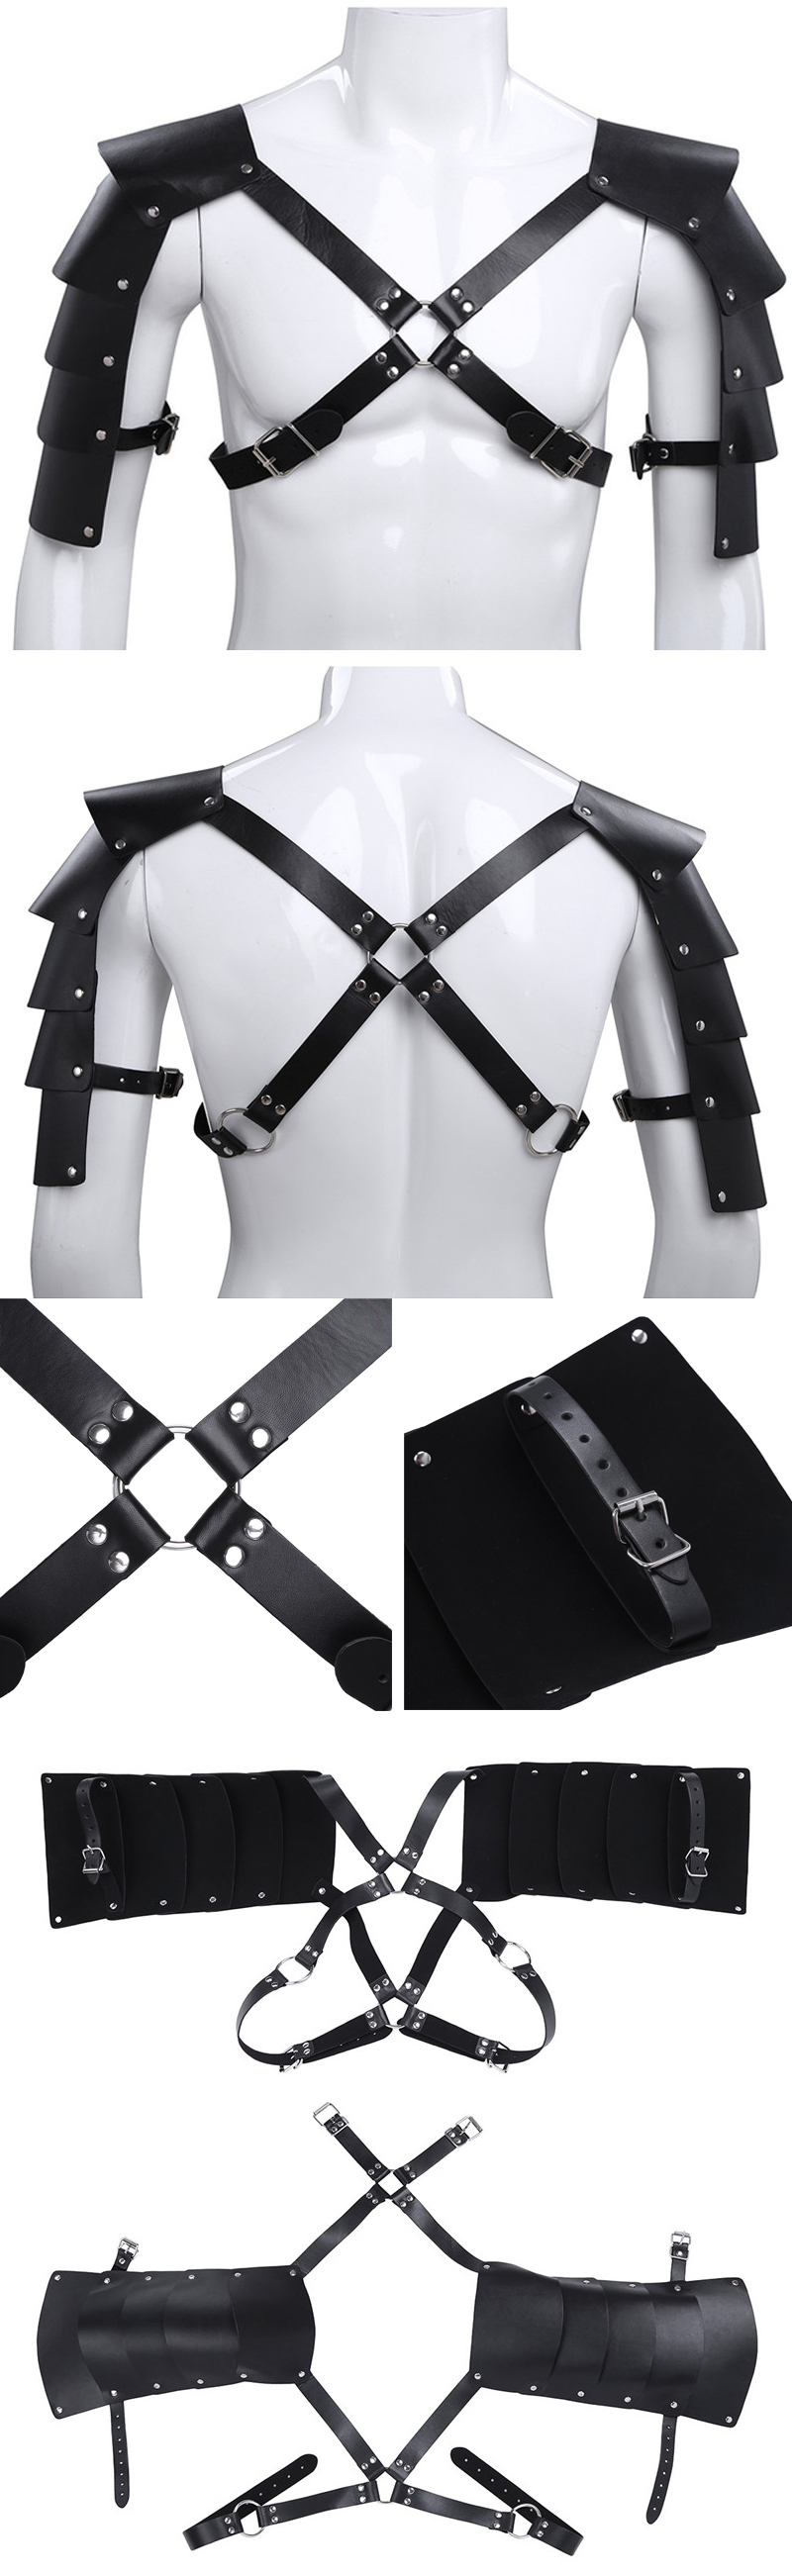 Tactical-Leather-Vest-Adjustable-Body-Chest-Harness-Men-Outdoor-Hunting-Belt-Shoulder-Tights-With-Bu-1384625-1